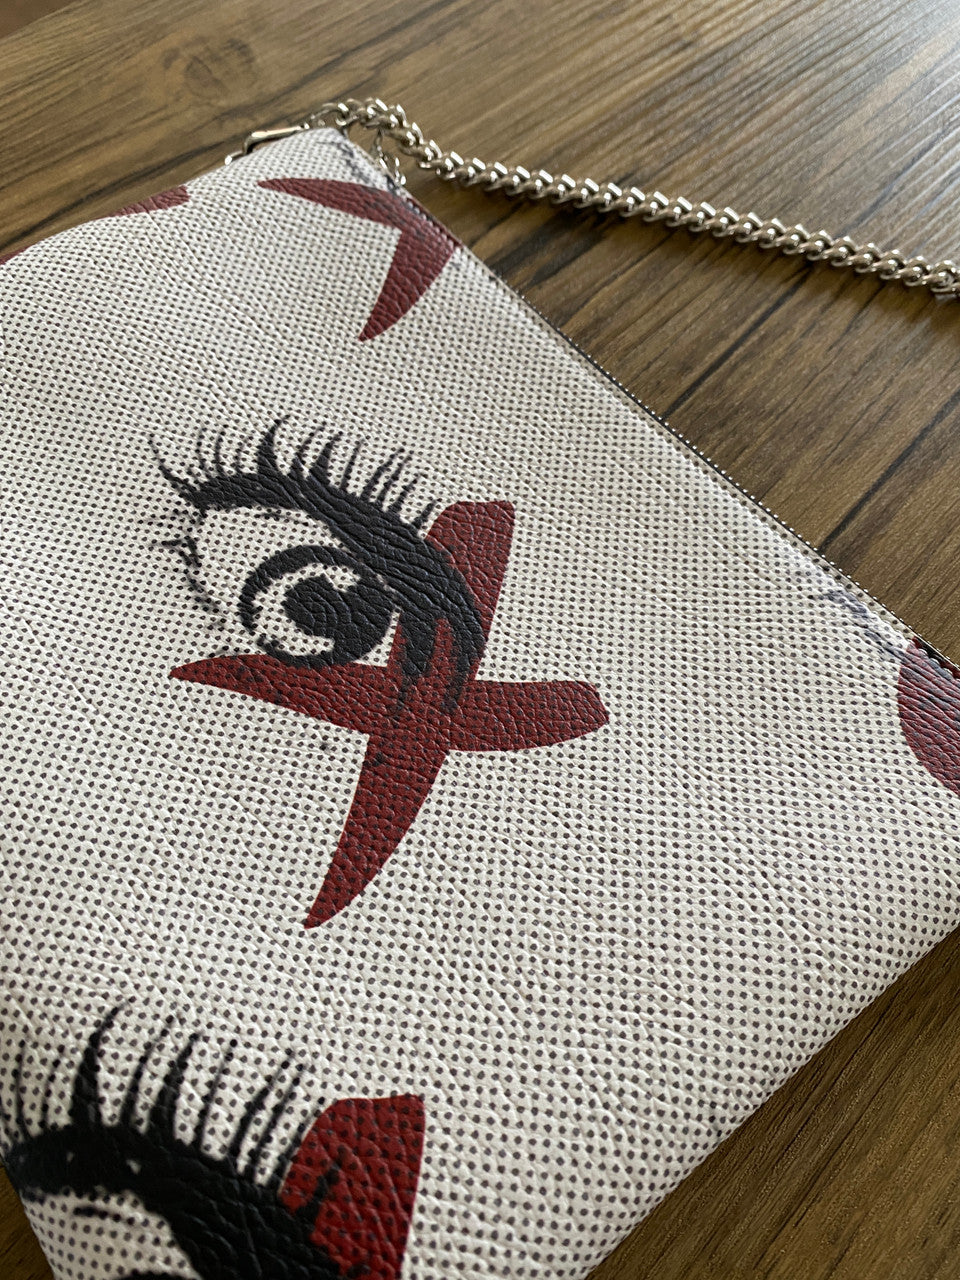 Eye Print Handmade Faux Leather Bag - Moira Rose Style Schitt's Creek Inspired - Purse - Handmade Unique - Gift Idea Chain